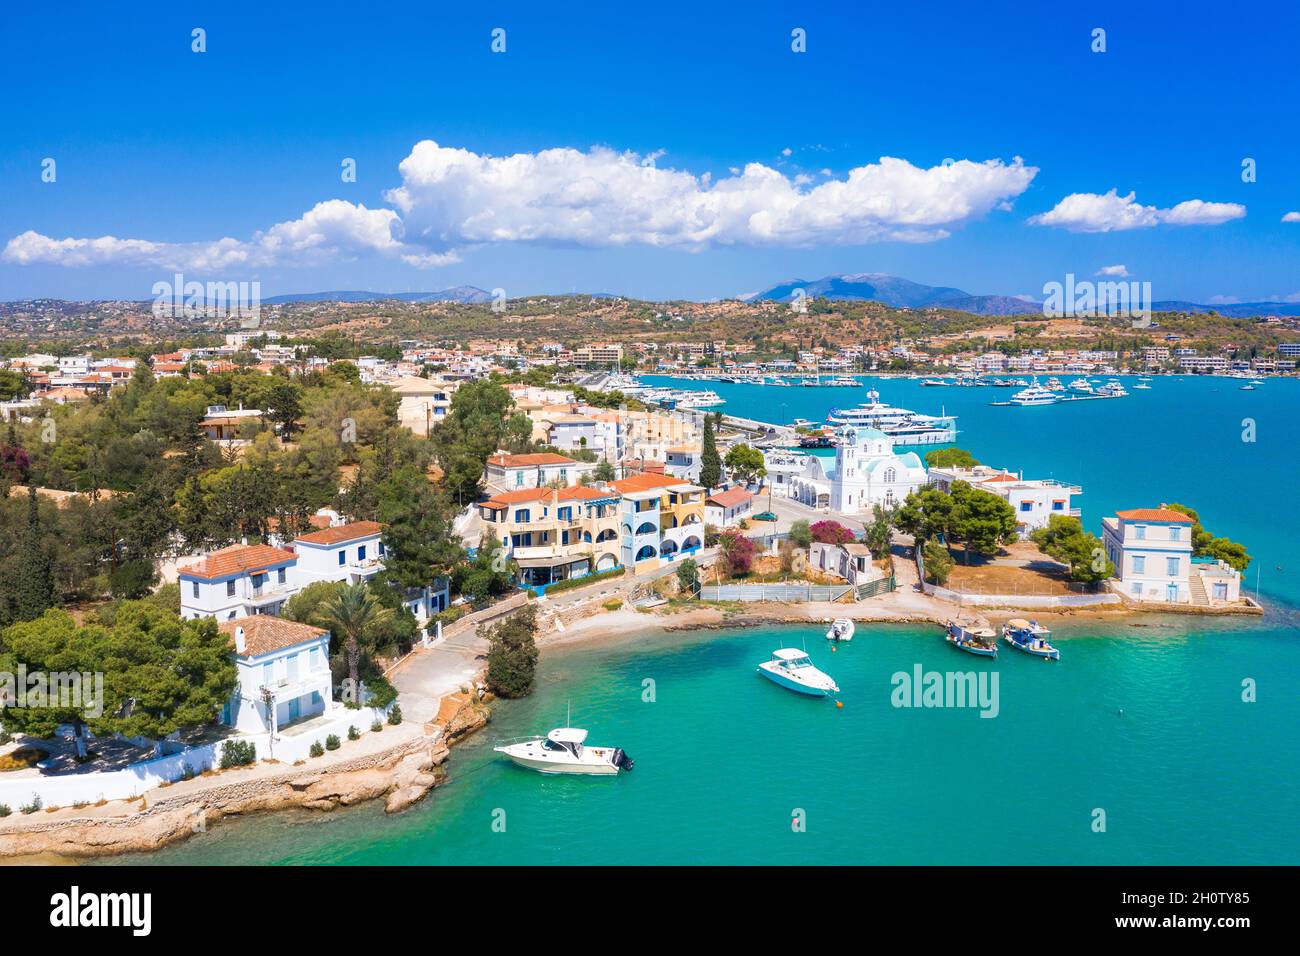 View of the picturesque coastal town of Porto Heli, Peloponnese, Greece. Stock Photo